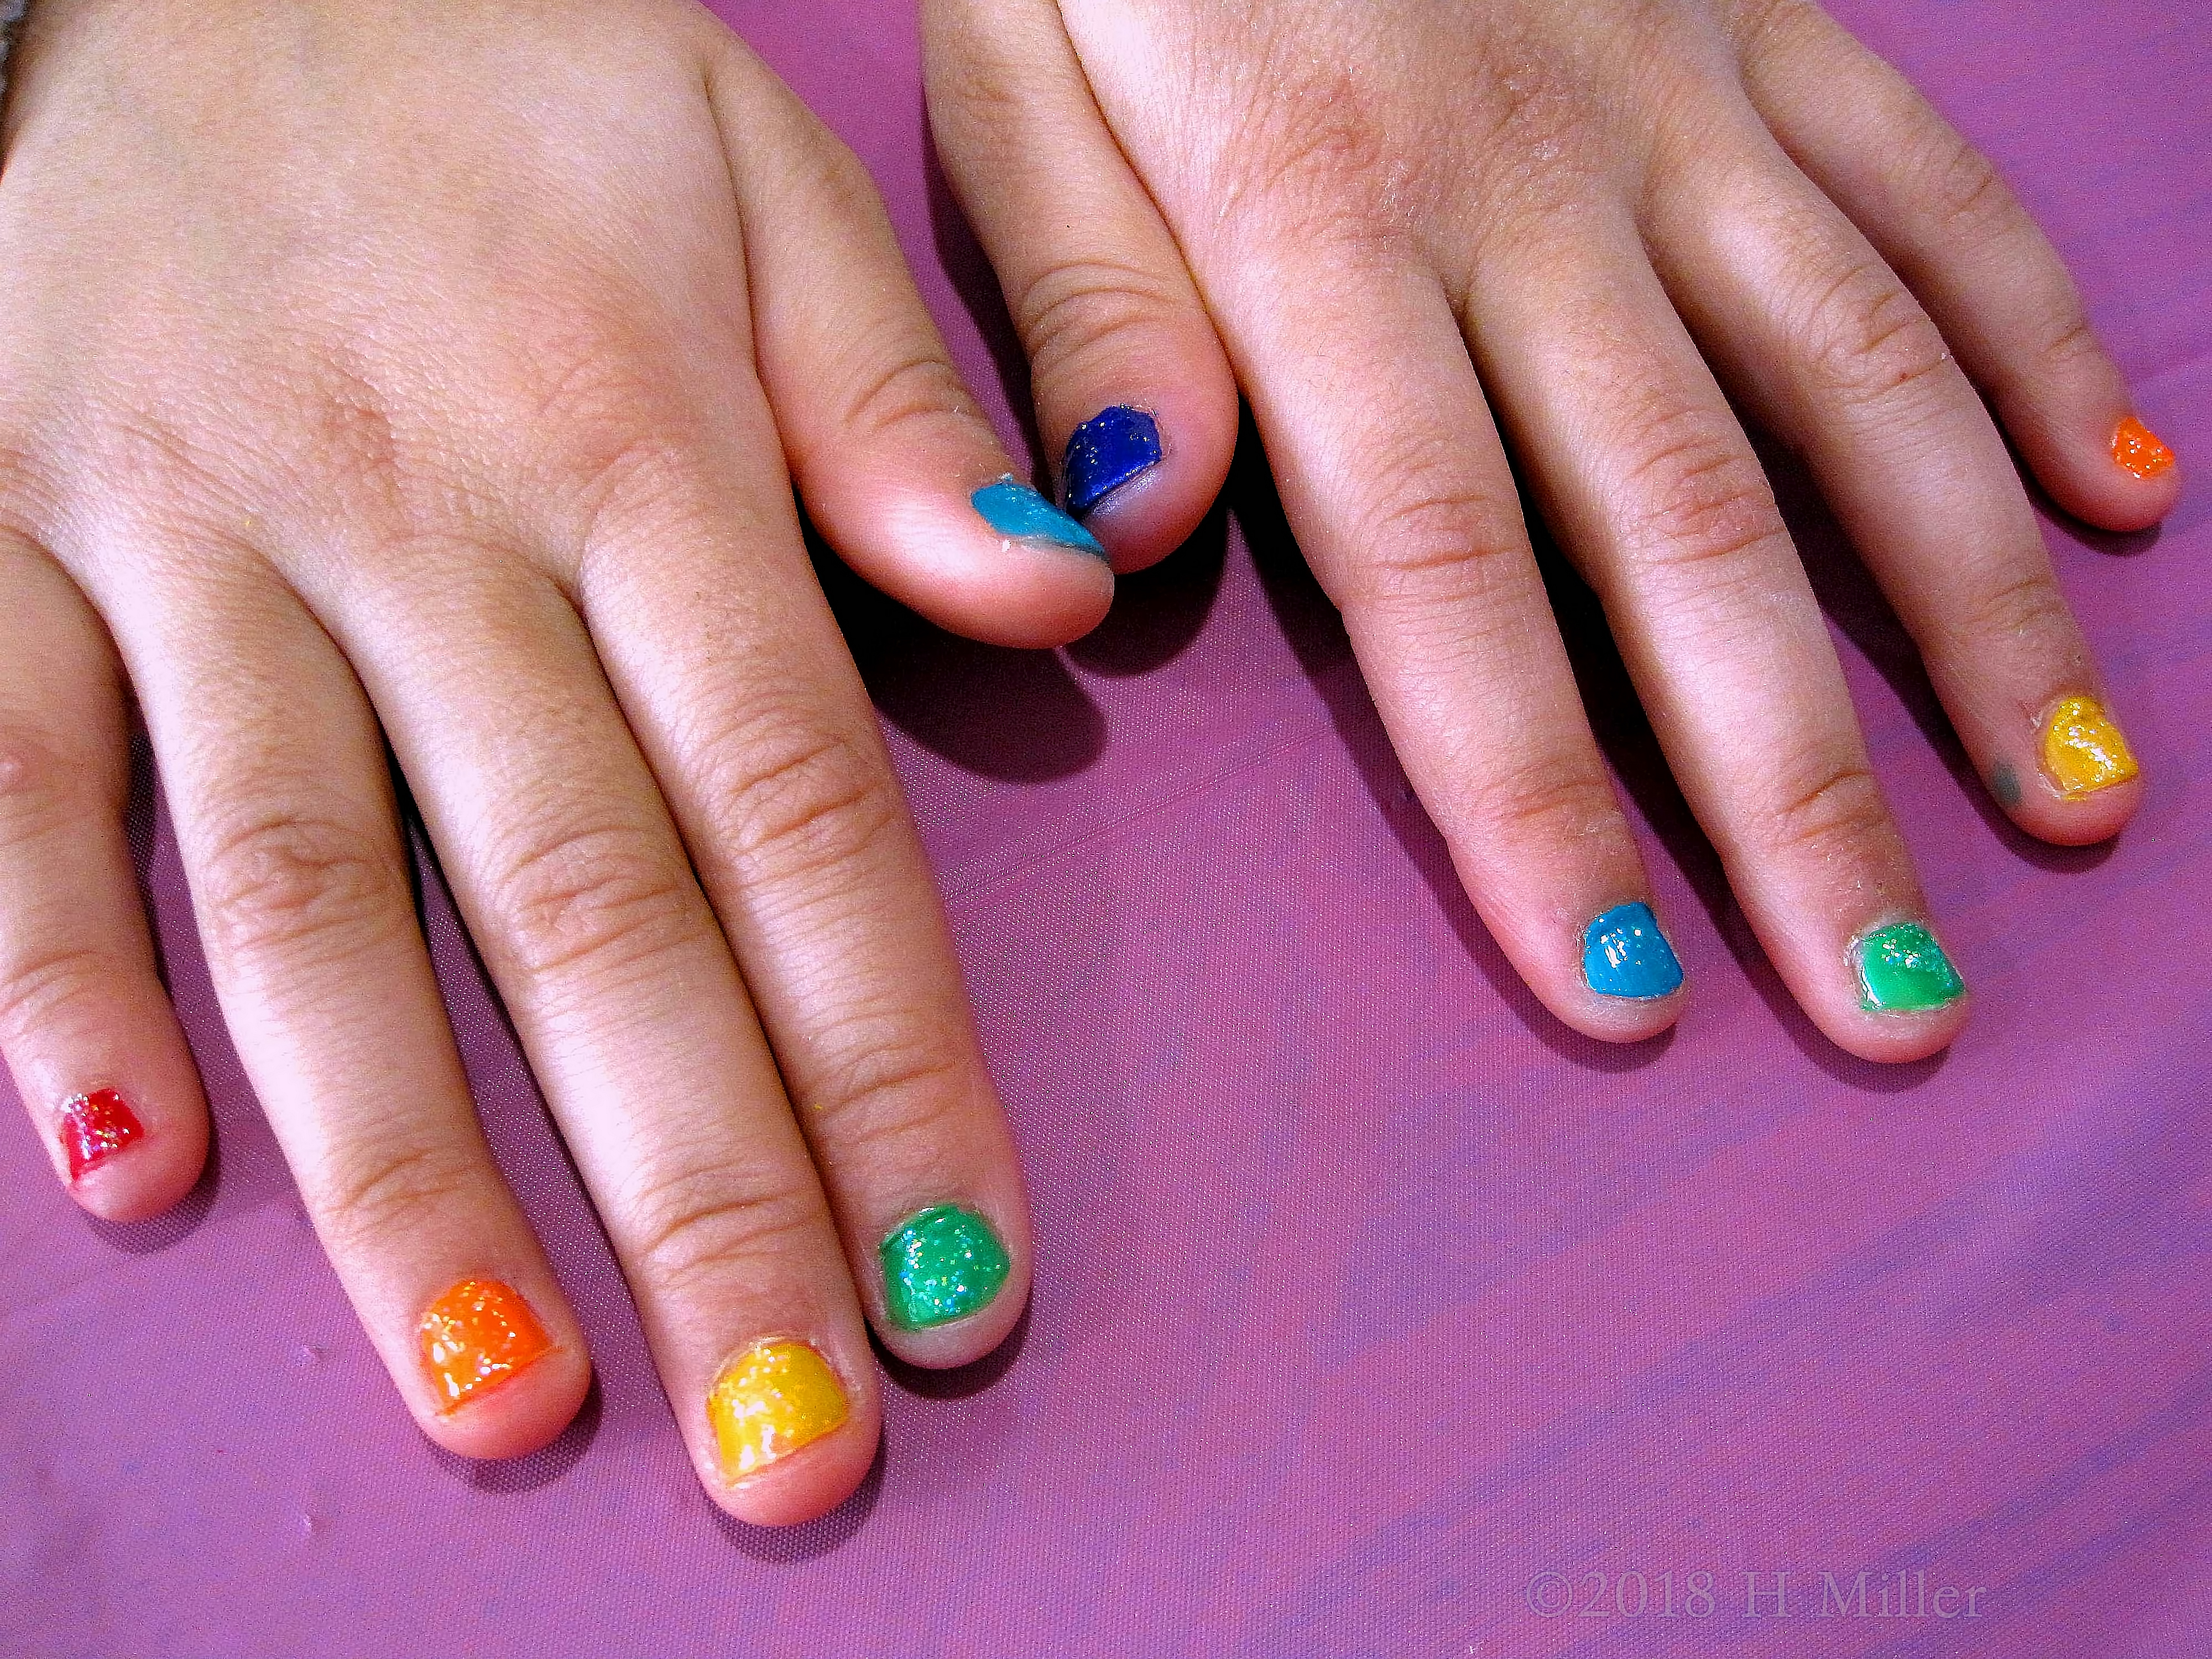 Kids Manicure With Multi Colors!